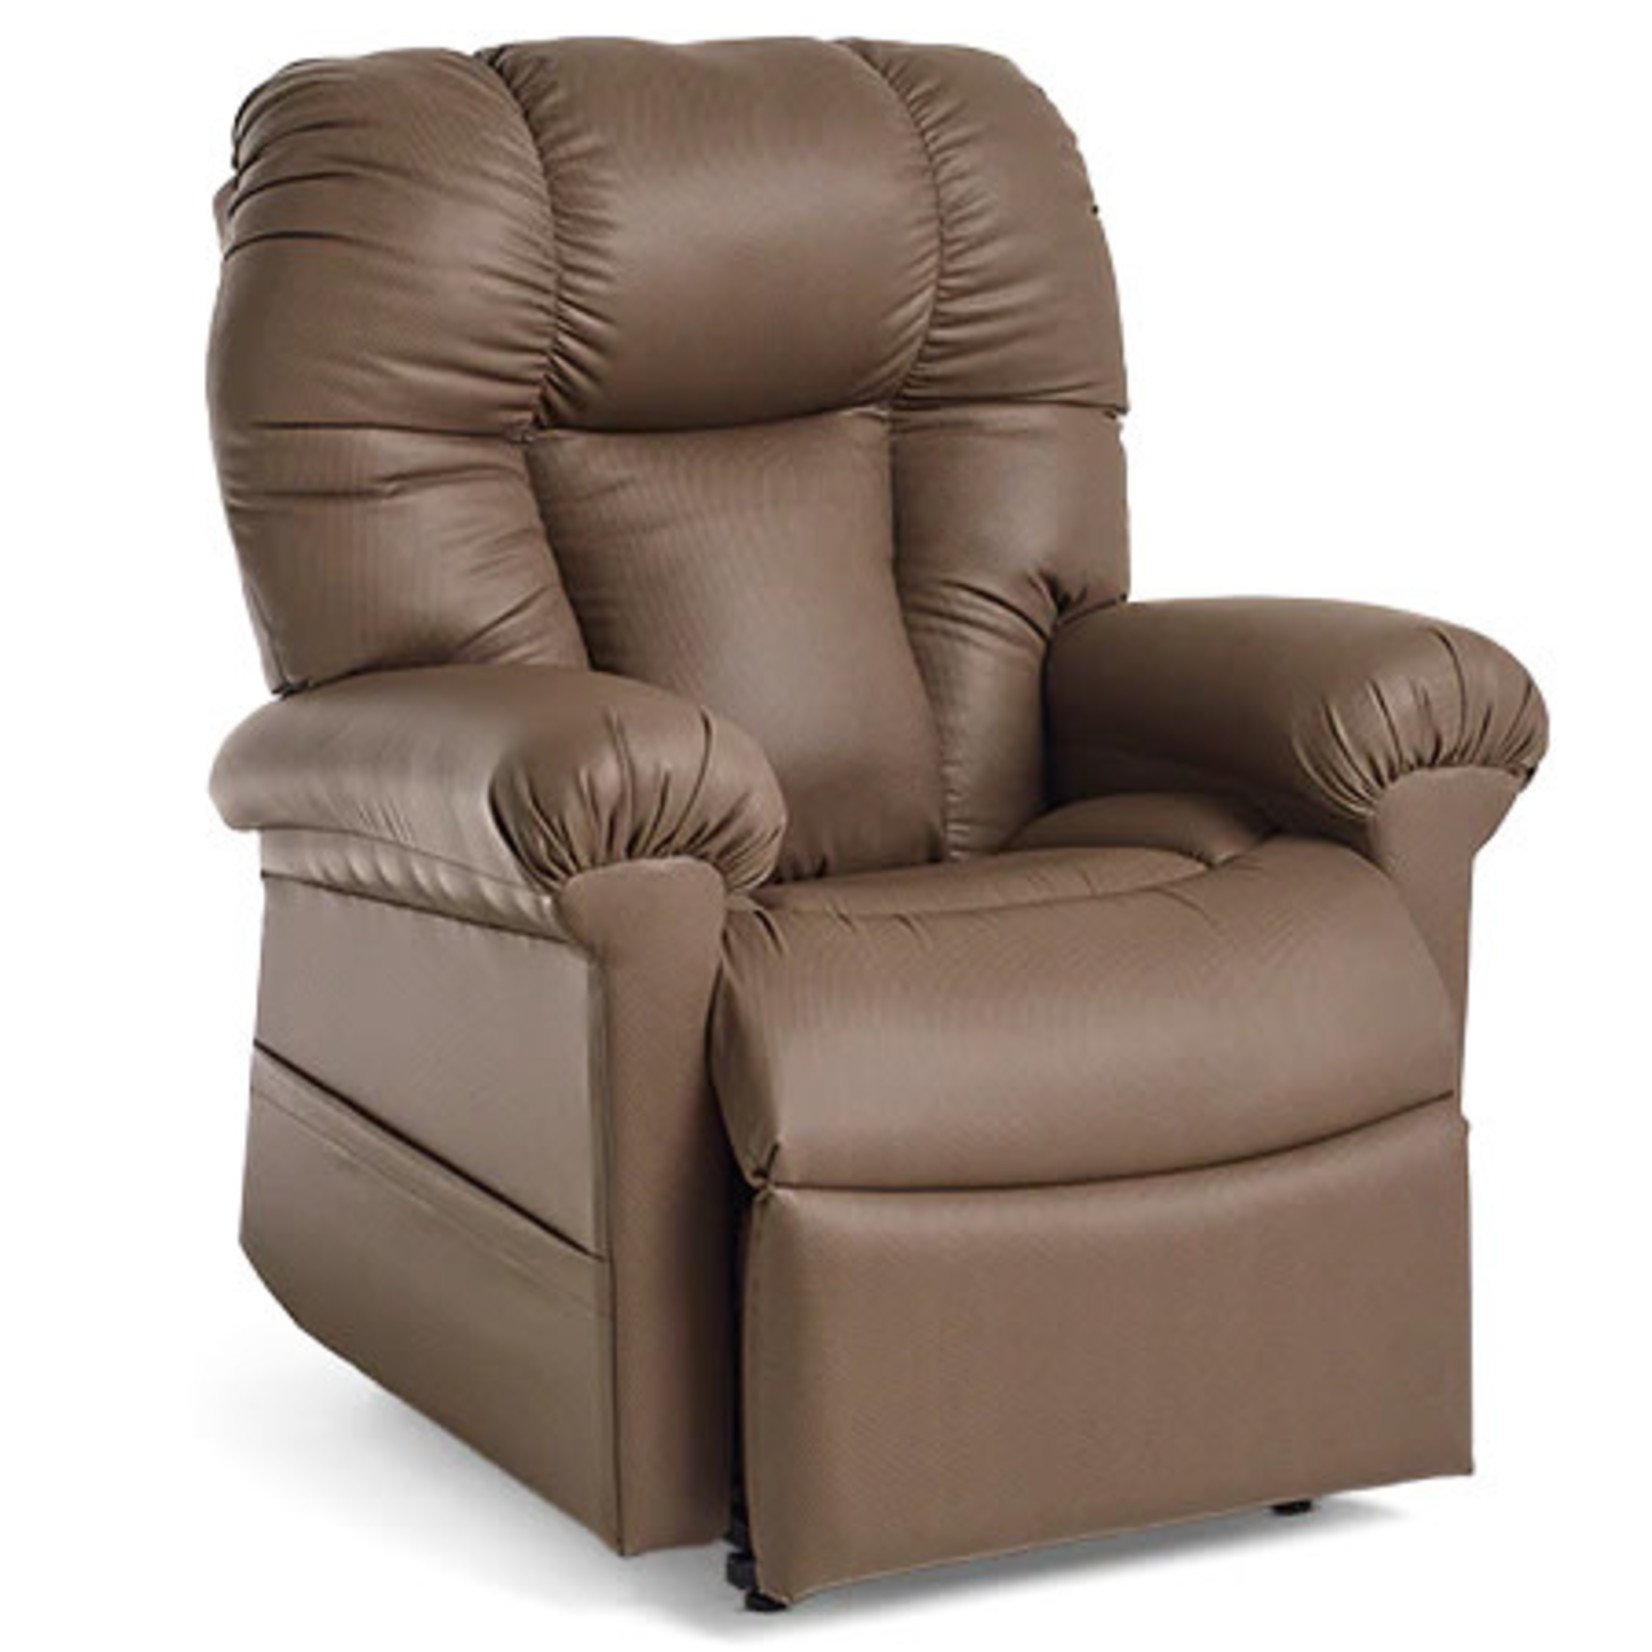 Journey Perfect Sleep Chair Deluxe 5 Zone Infinite Positions